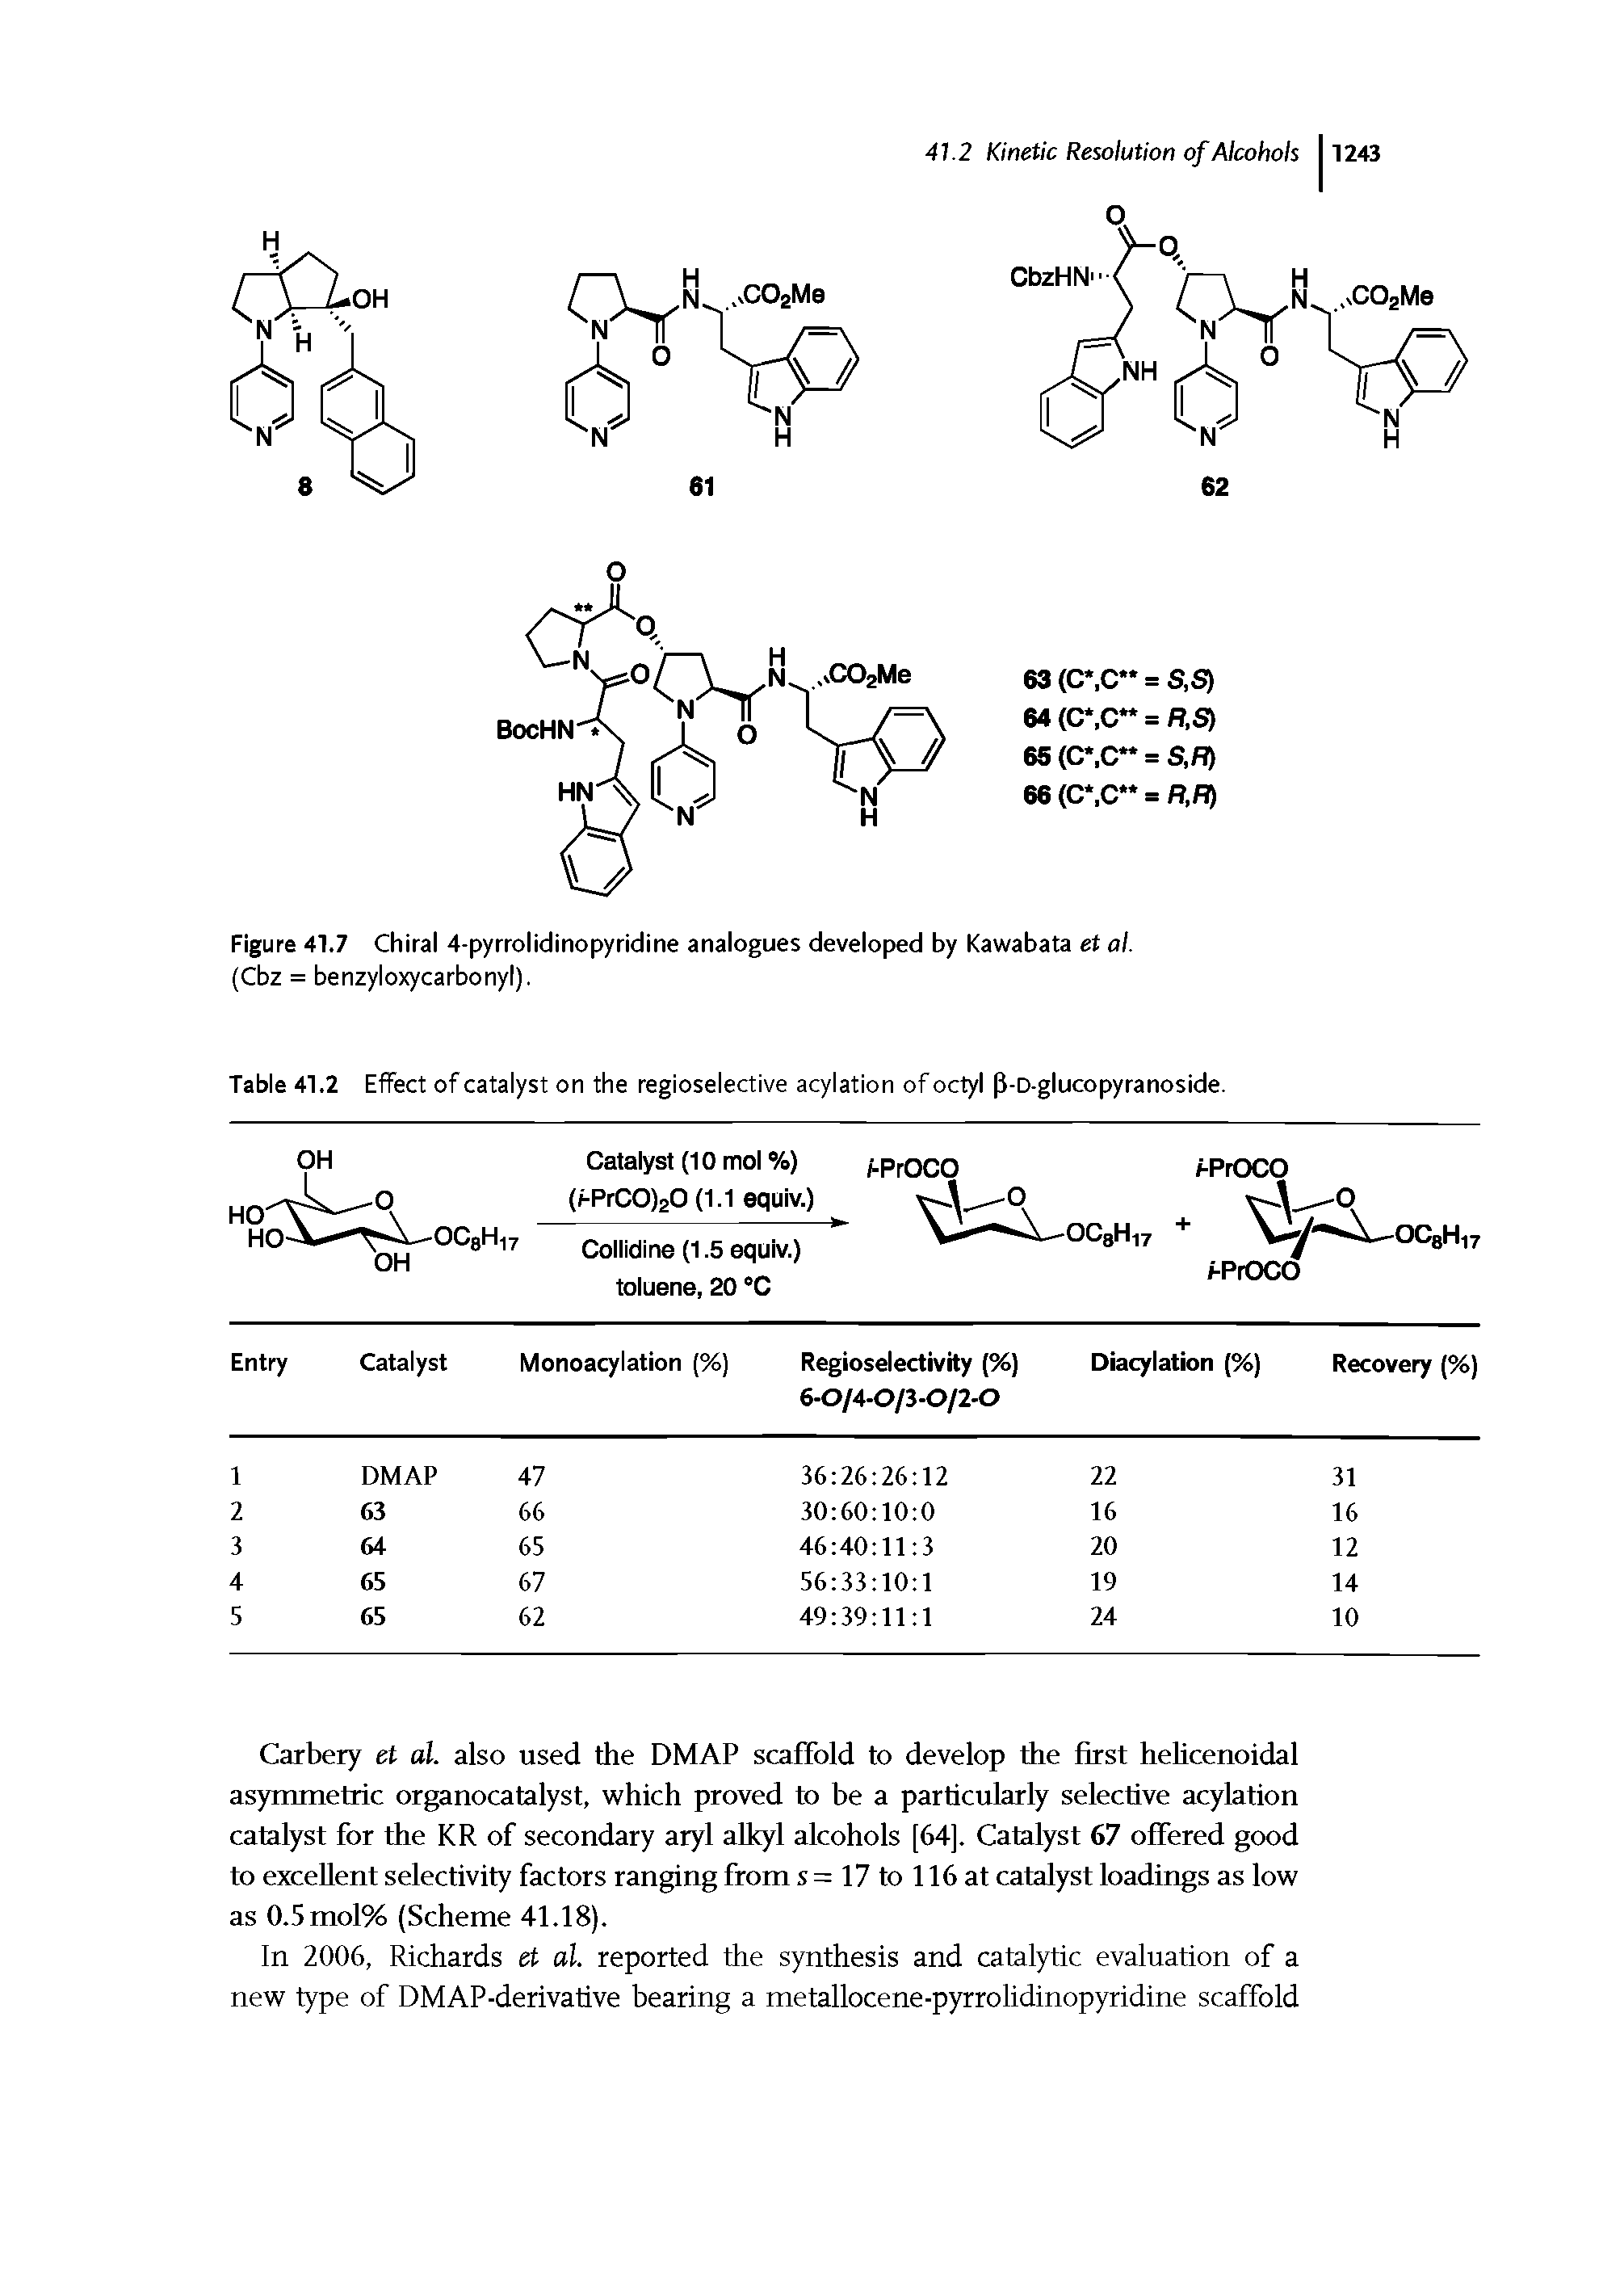 Figure 41.7 Chiral 4-pyrrolidinopyridine analogues developed by Kawabata et al. (Cbz = benzyloxycarbonyl).